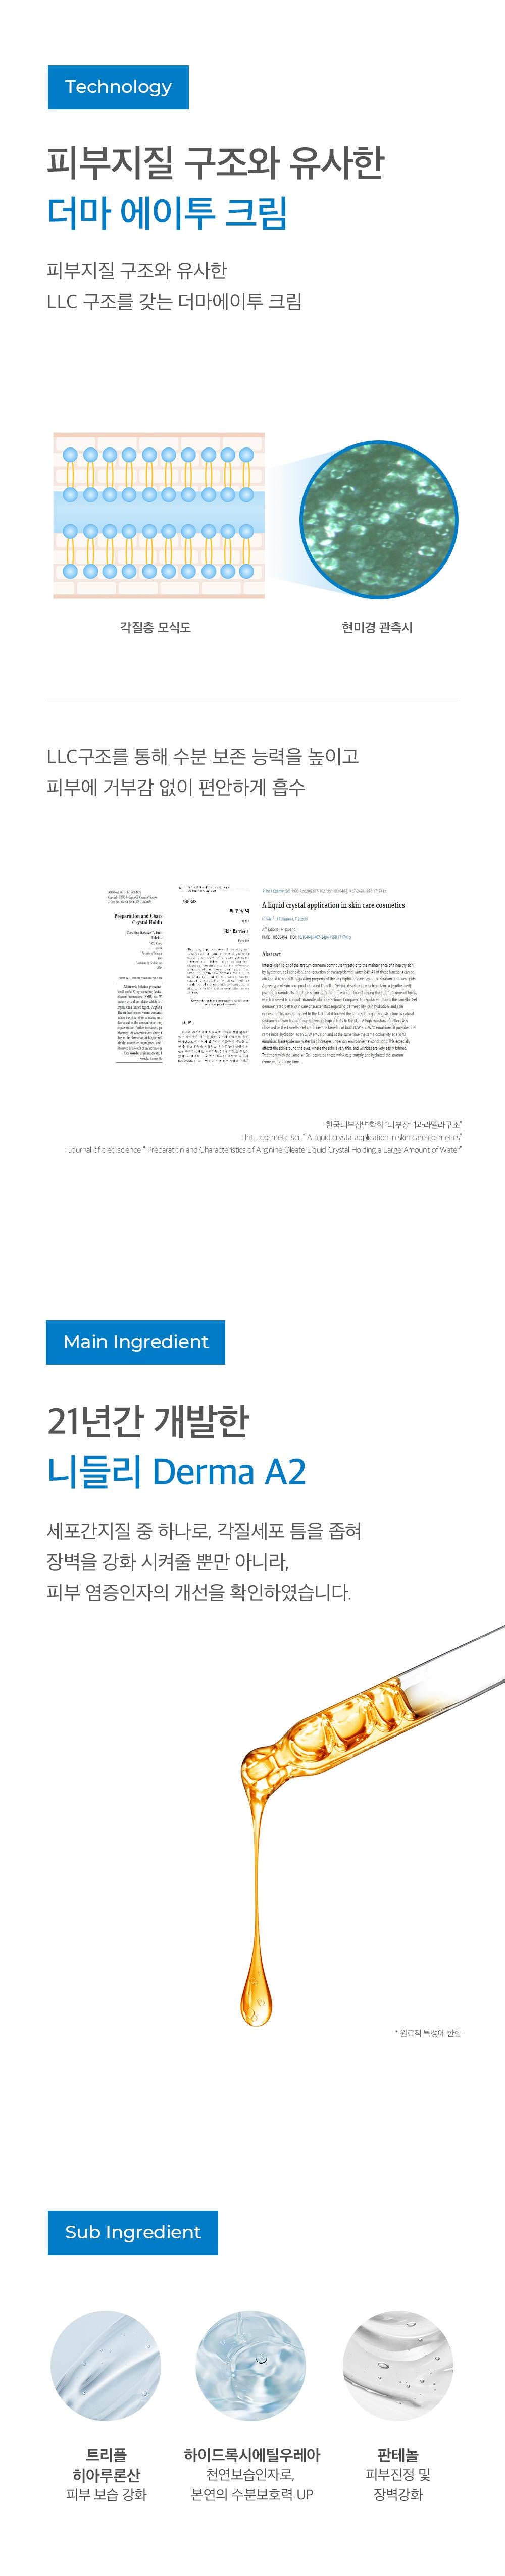 [Needly] Derma A2 Cream 150ml